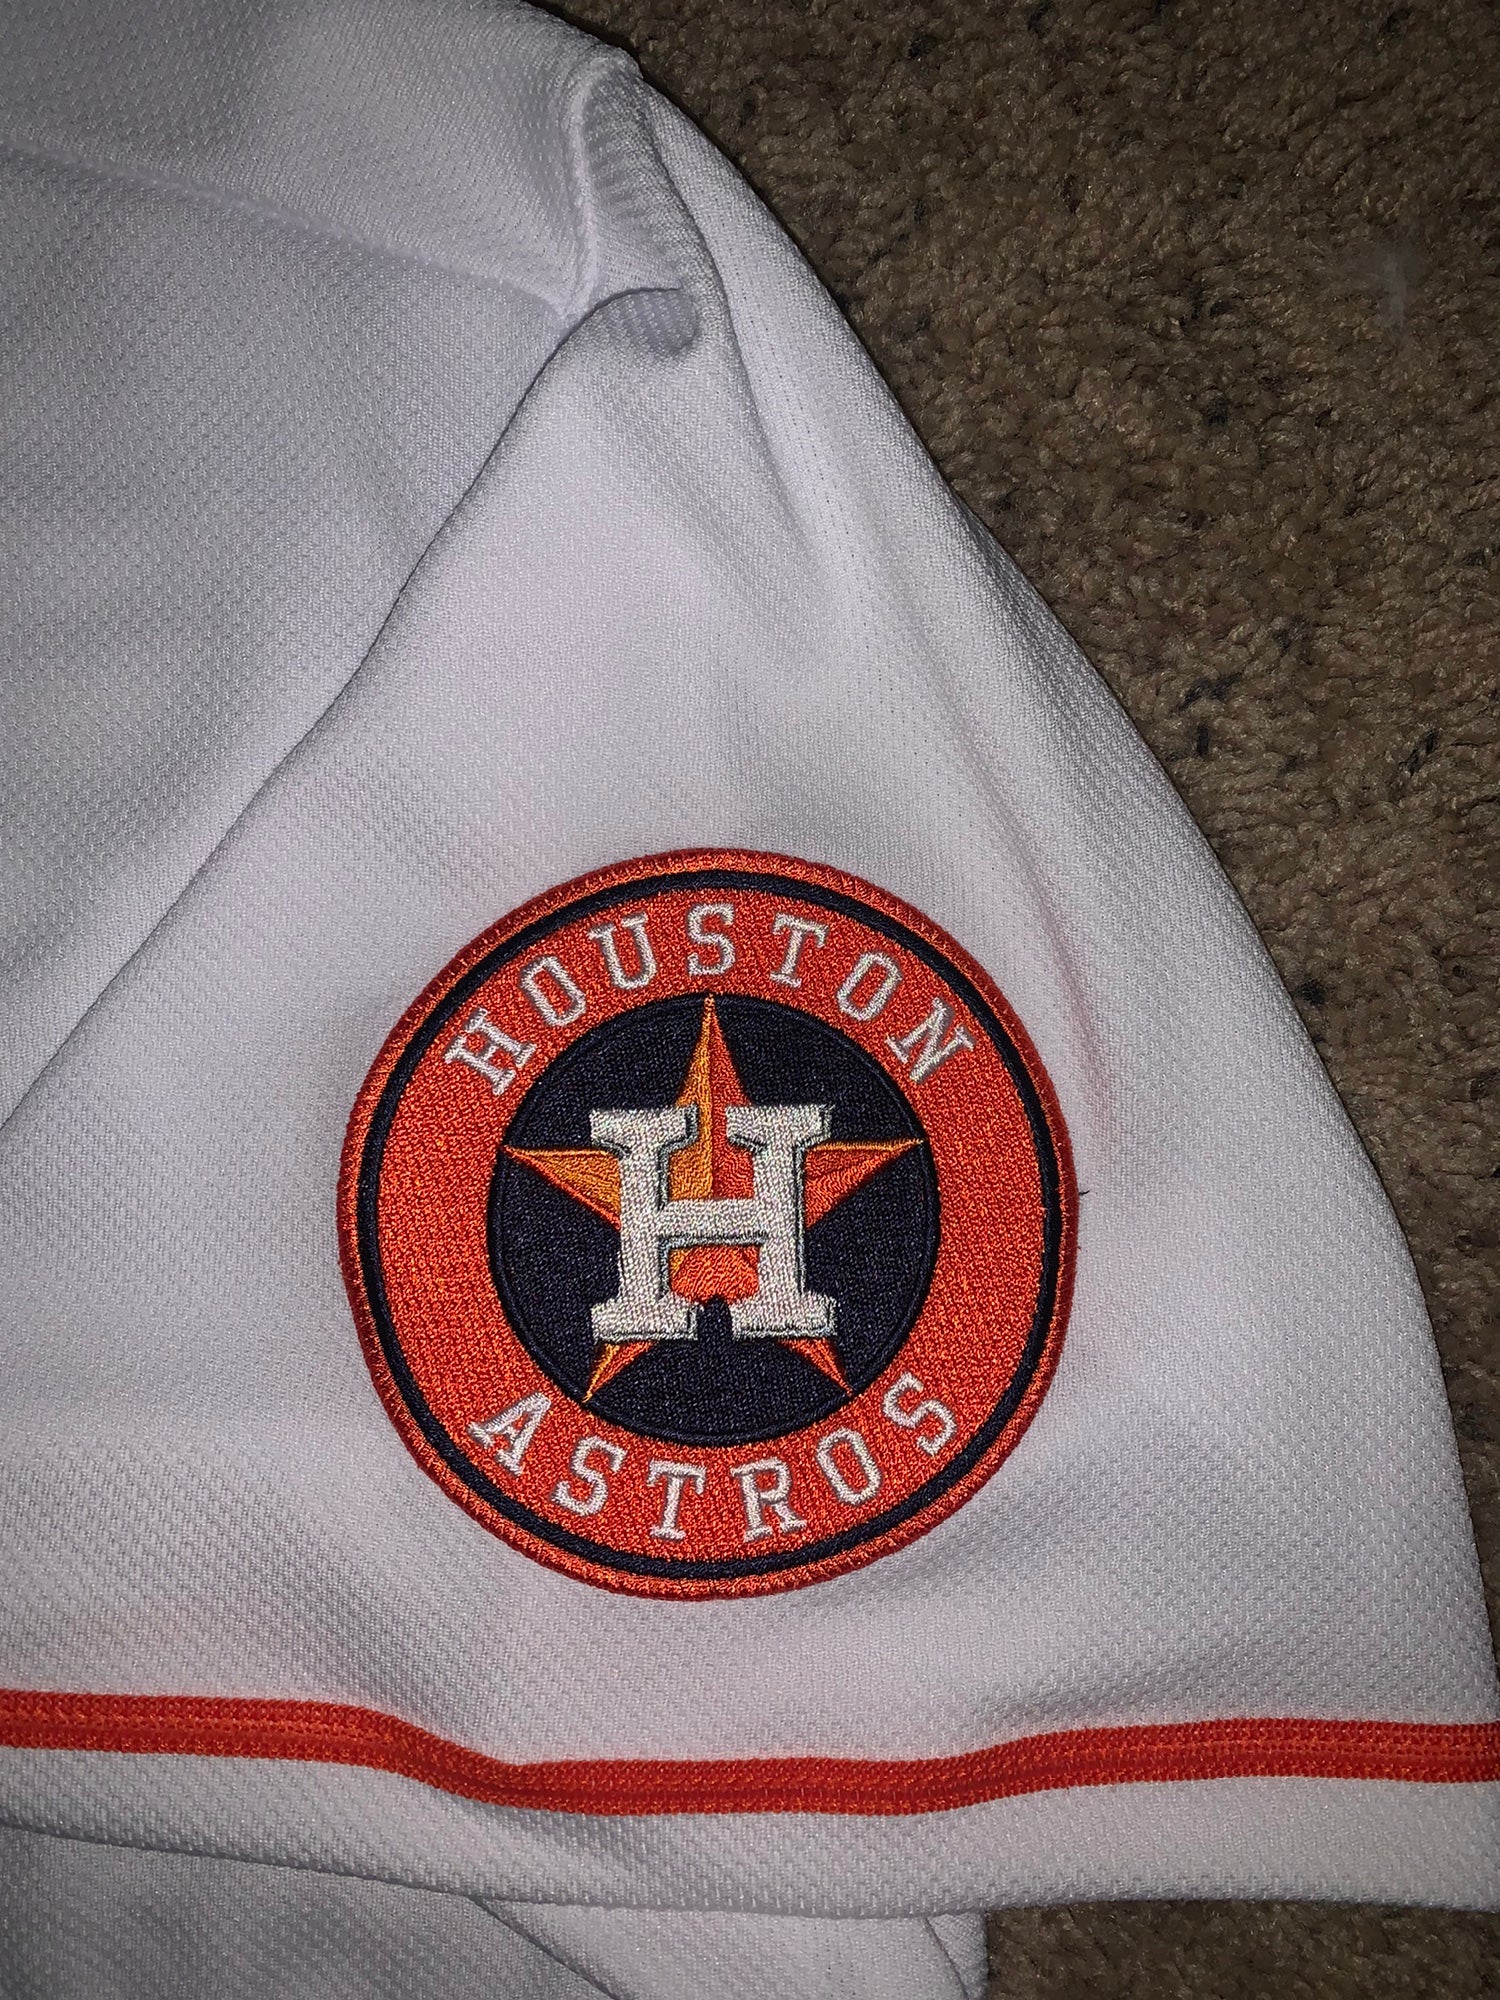 Men's Houston Astros Jose Altuve Nike White 2022 World Series Champions  Home Authentic Jersey